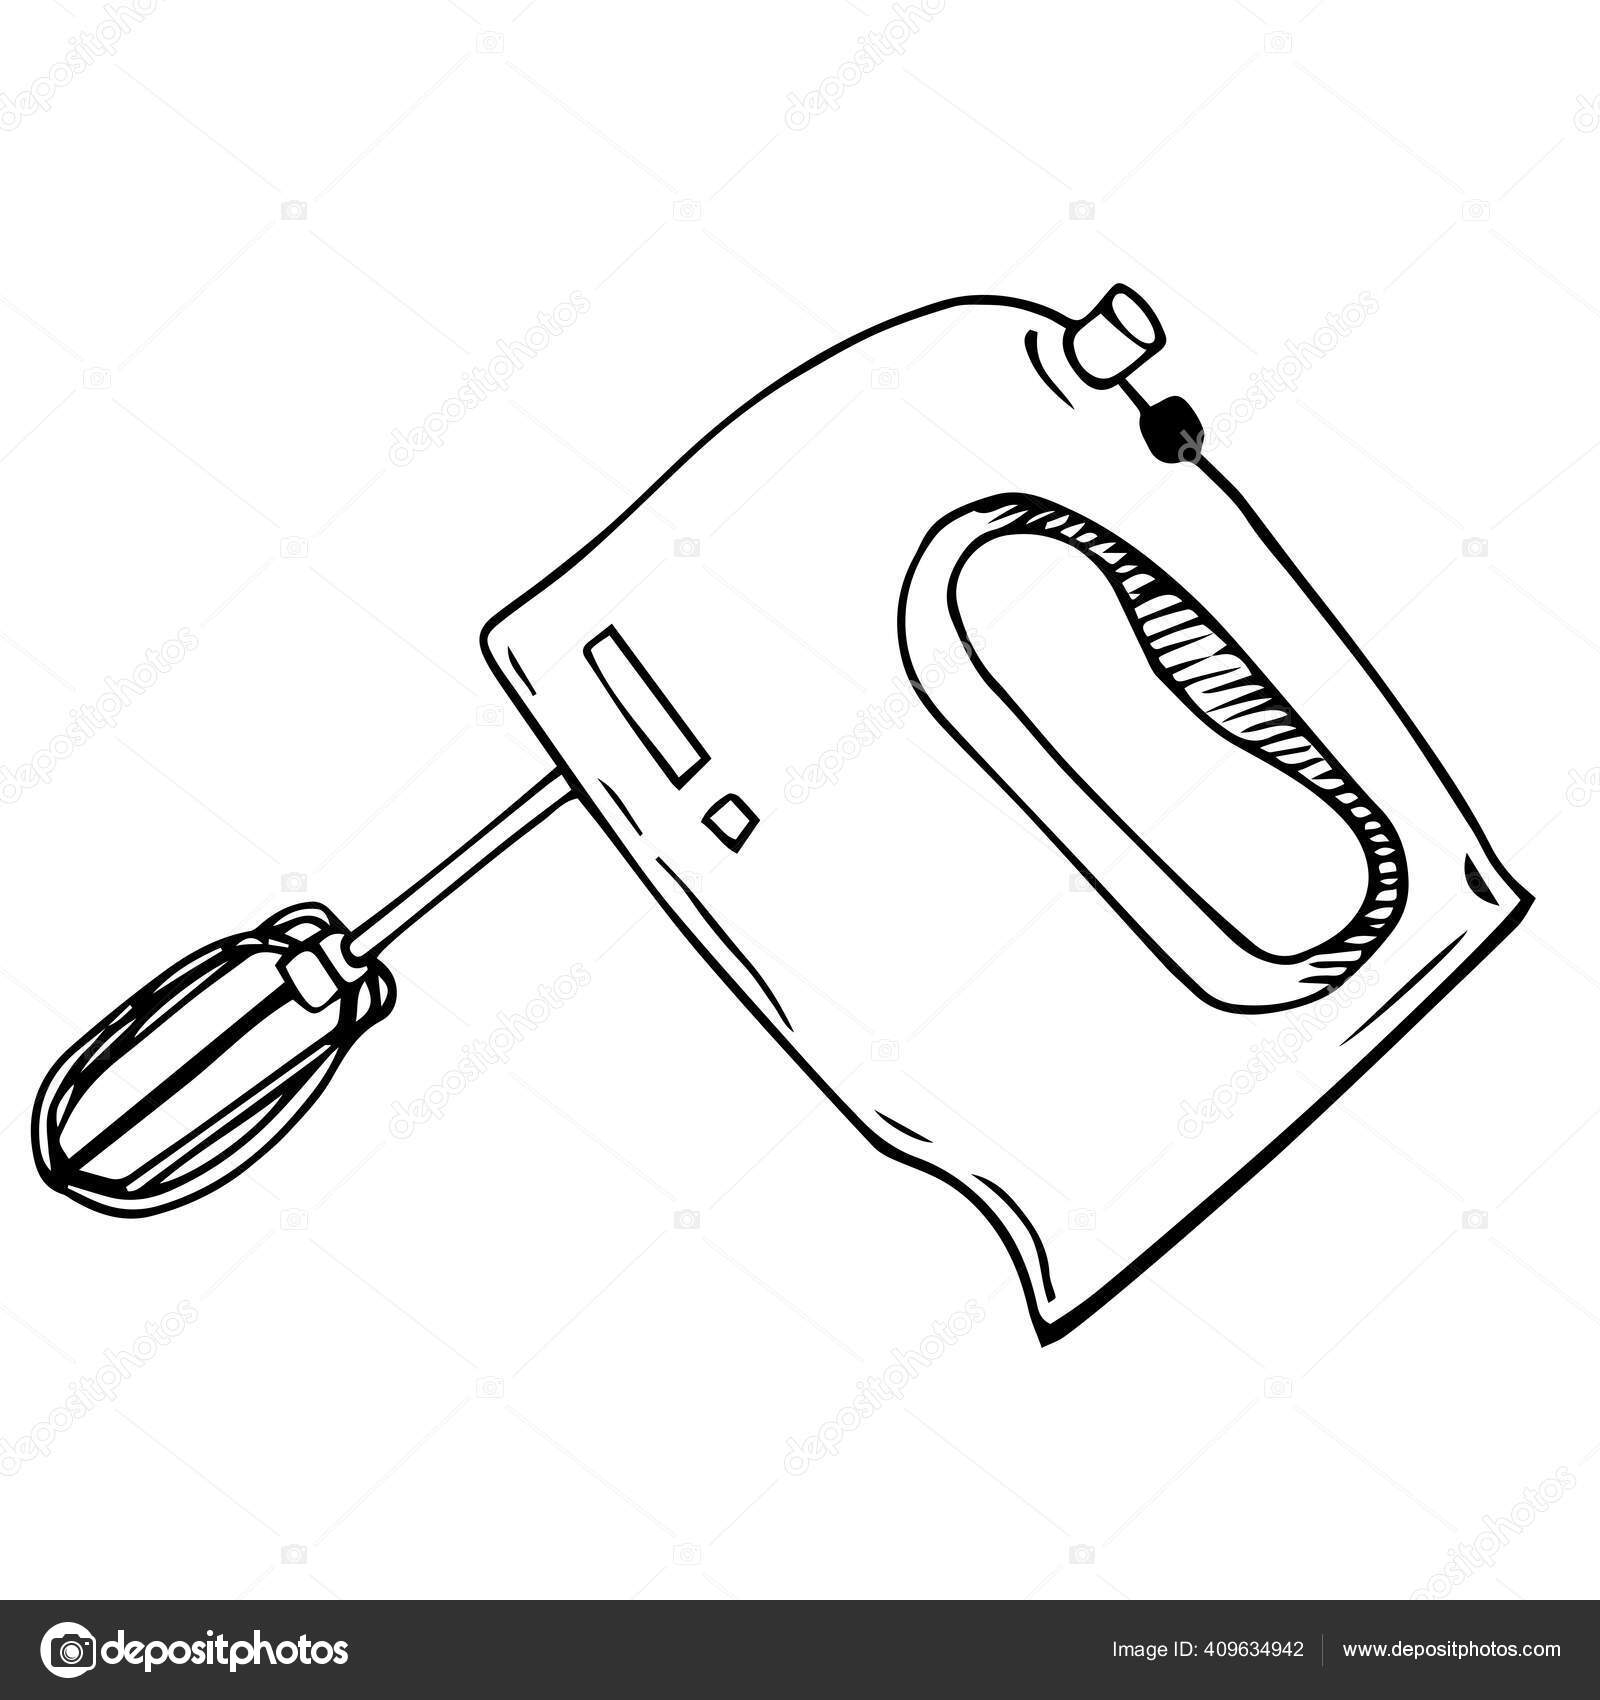 https://st4.depositphotos.com/36487792/40963/v/1600/depositphotos_409634942-stock-illustration-hand-drawn-black-outline-cartoon.jpg